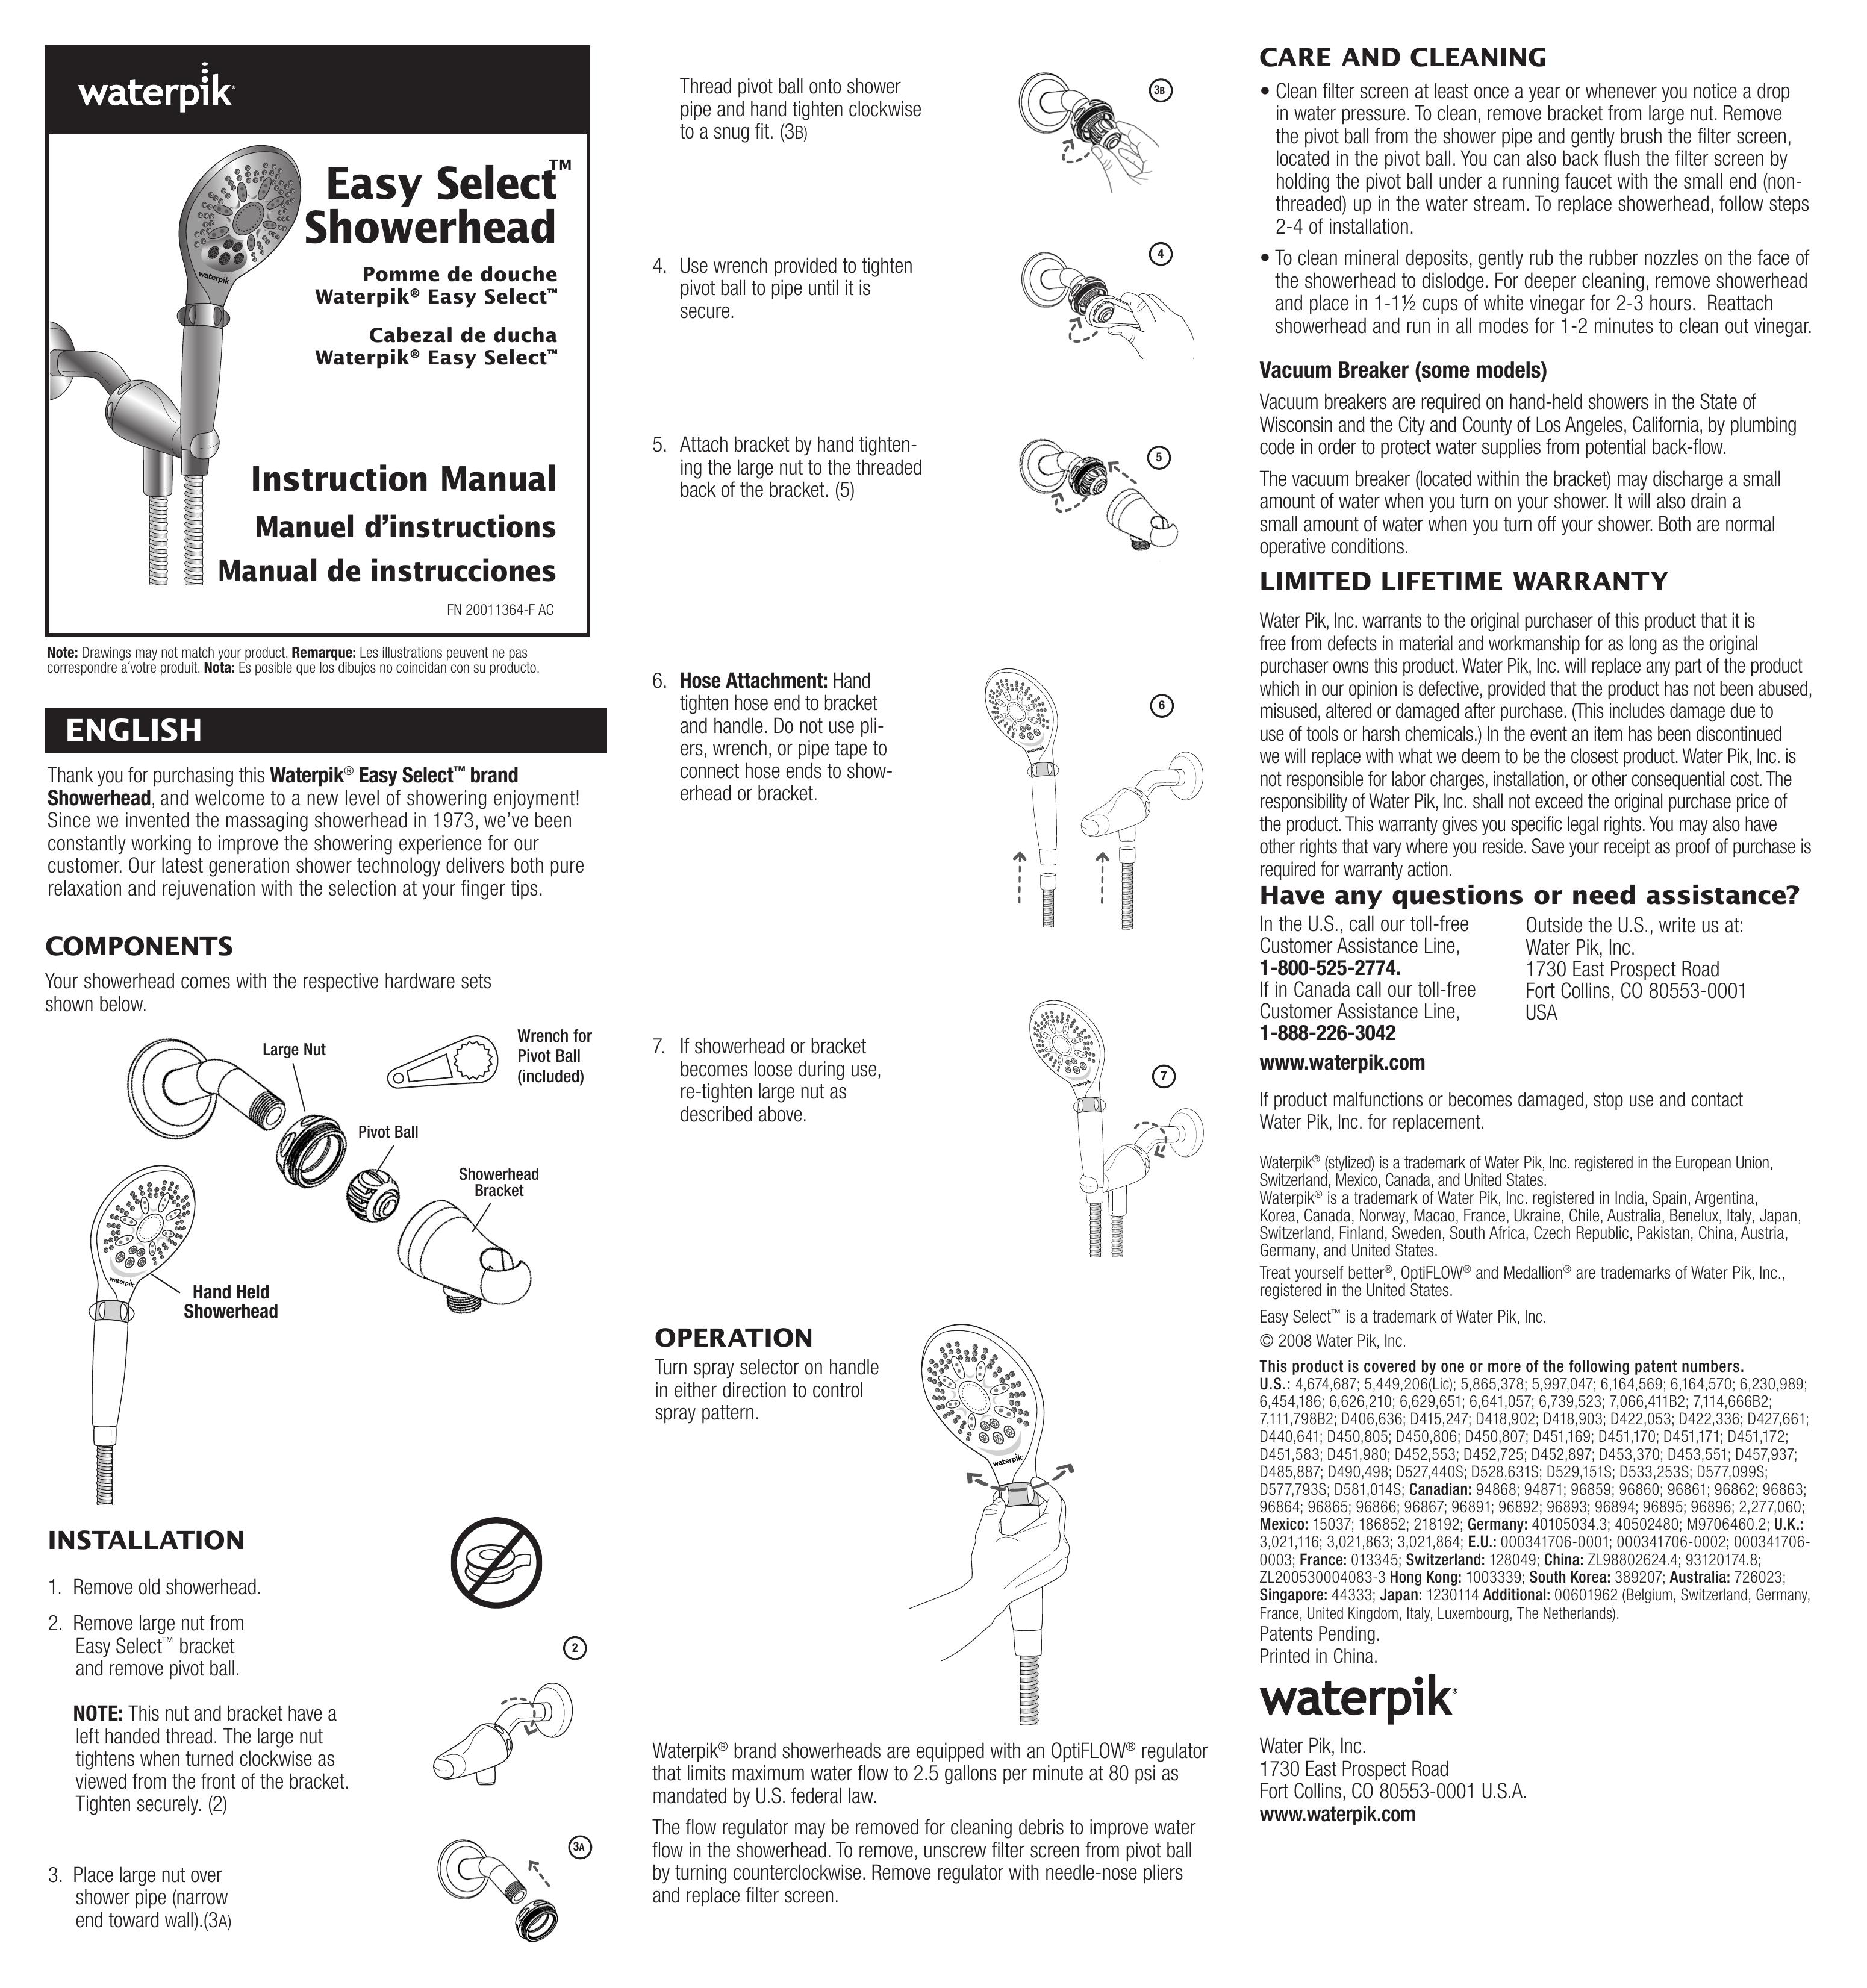 Waterpik Technologies FN 20011364-F AC Outdoor Shower User Manual